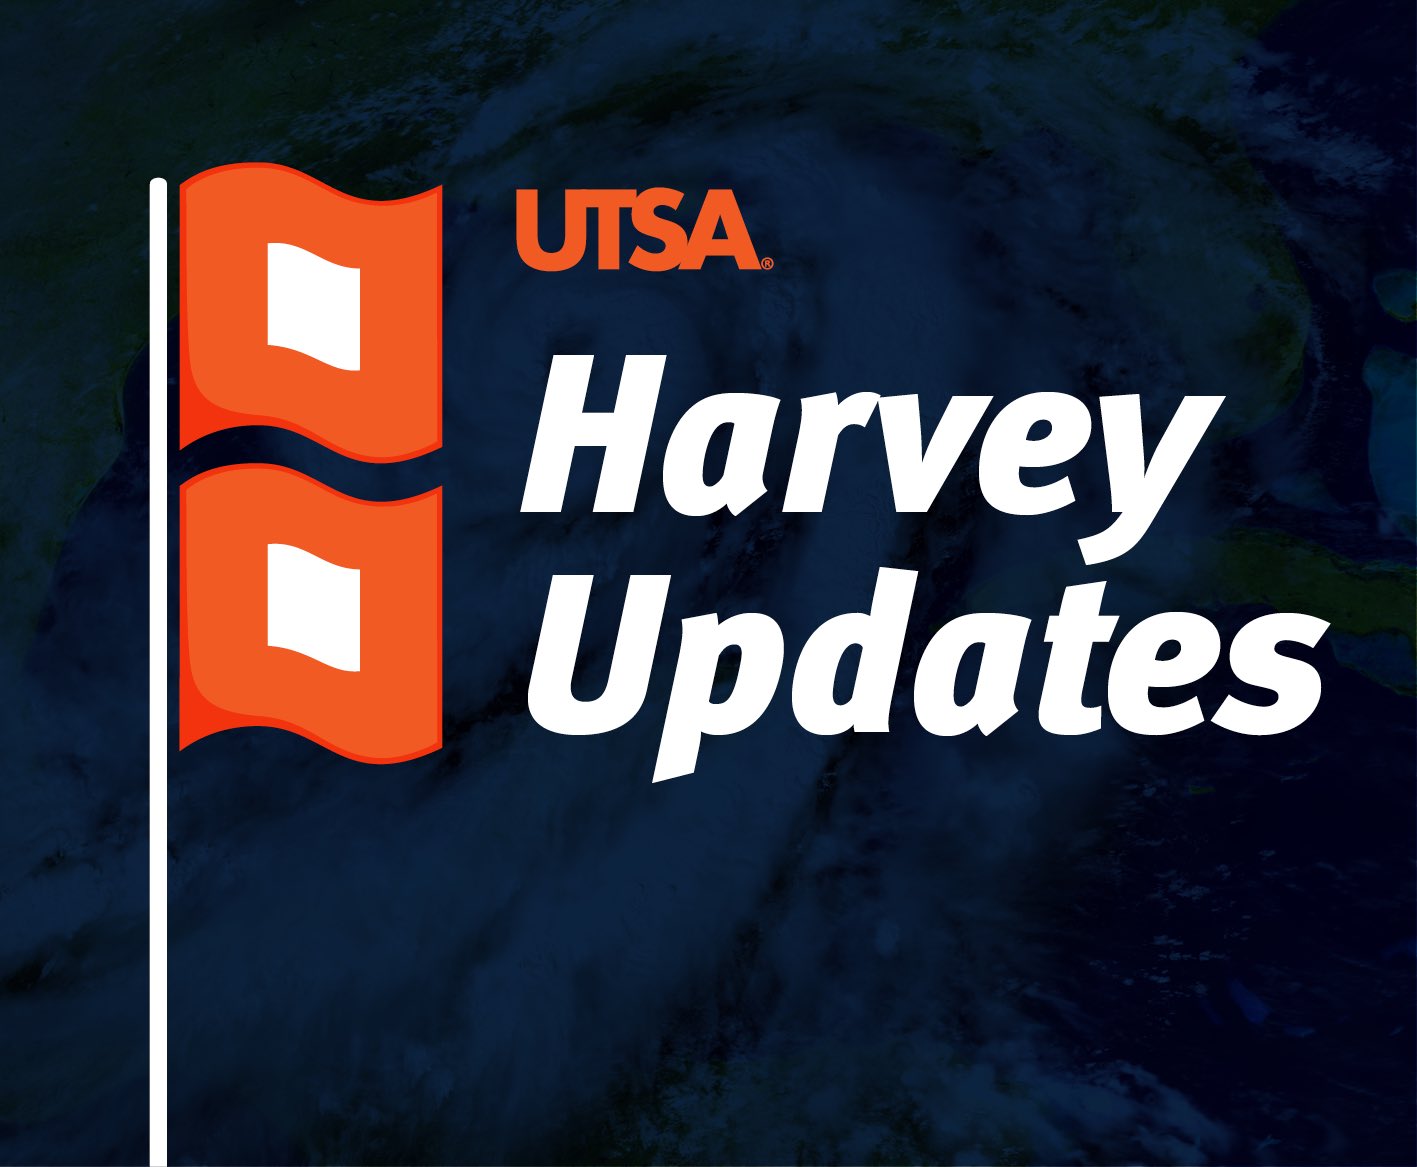 Hurricane Harvey updates